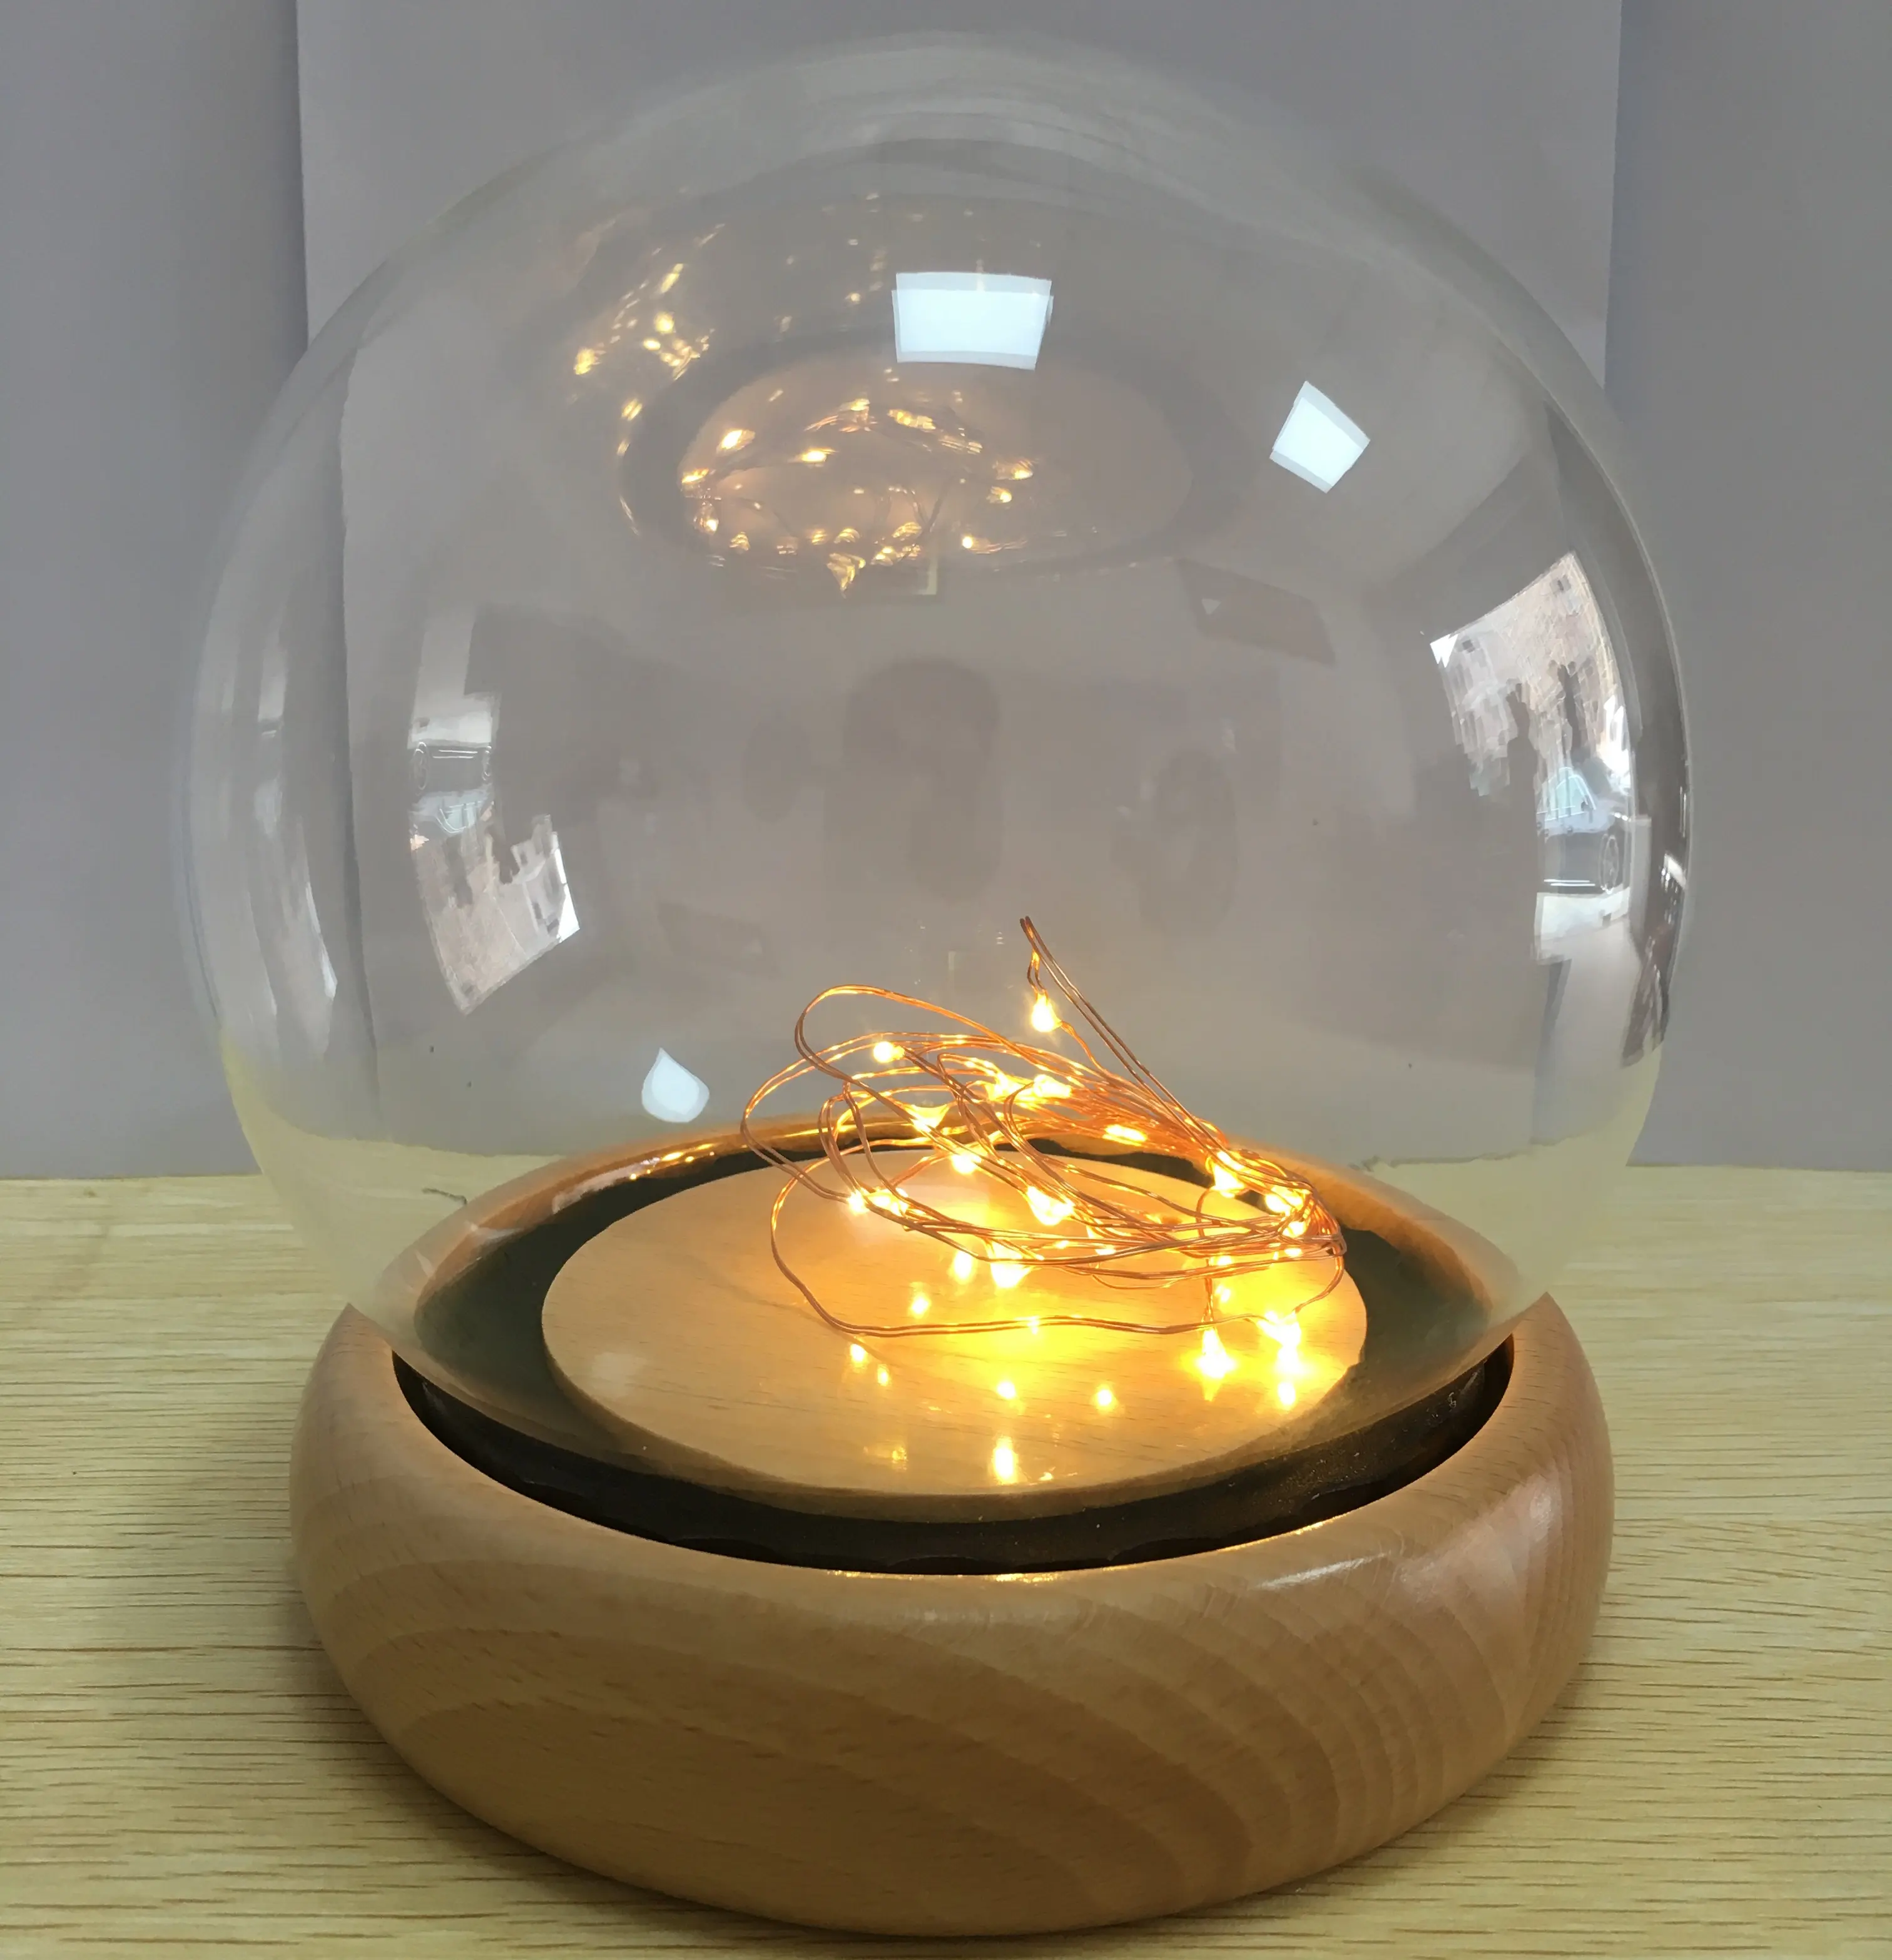 Glaskugel kuppel mit Kupfer-LED-Lichterkette zur Dekoration